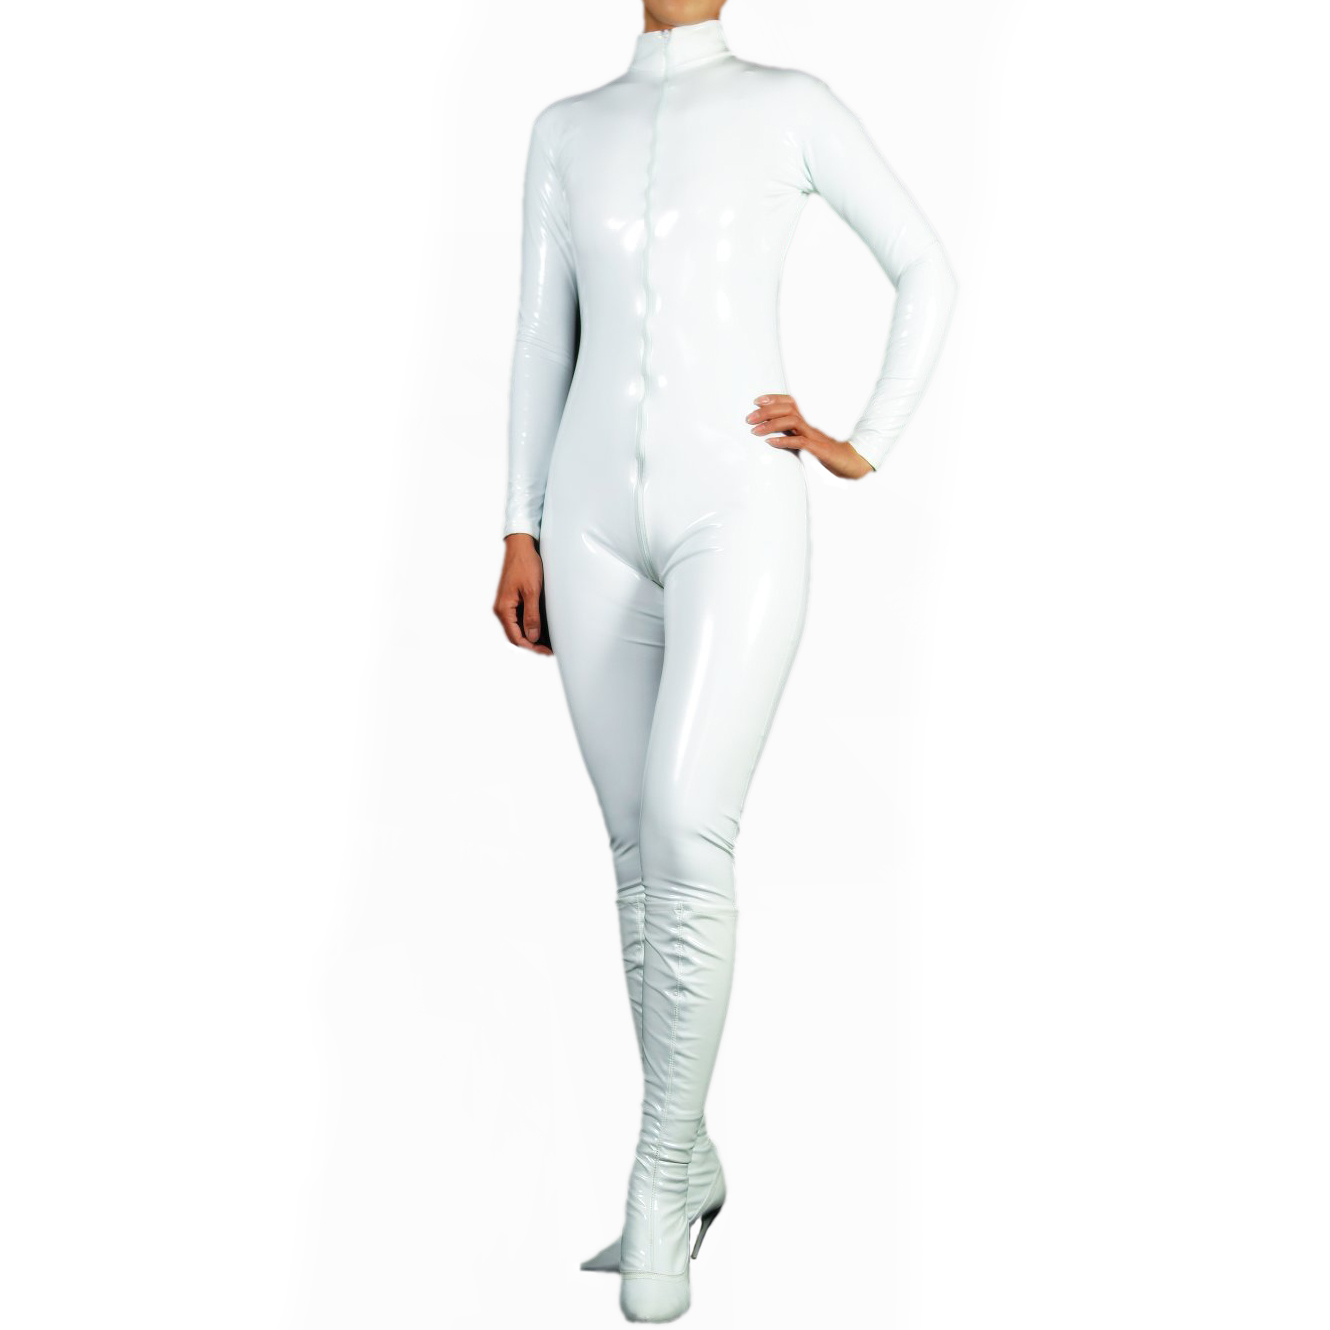 Women's Jumpsuit-styled White PVC Front Zipper Catsuit (M43) - Click Image to Close